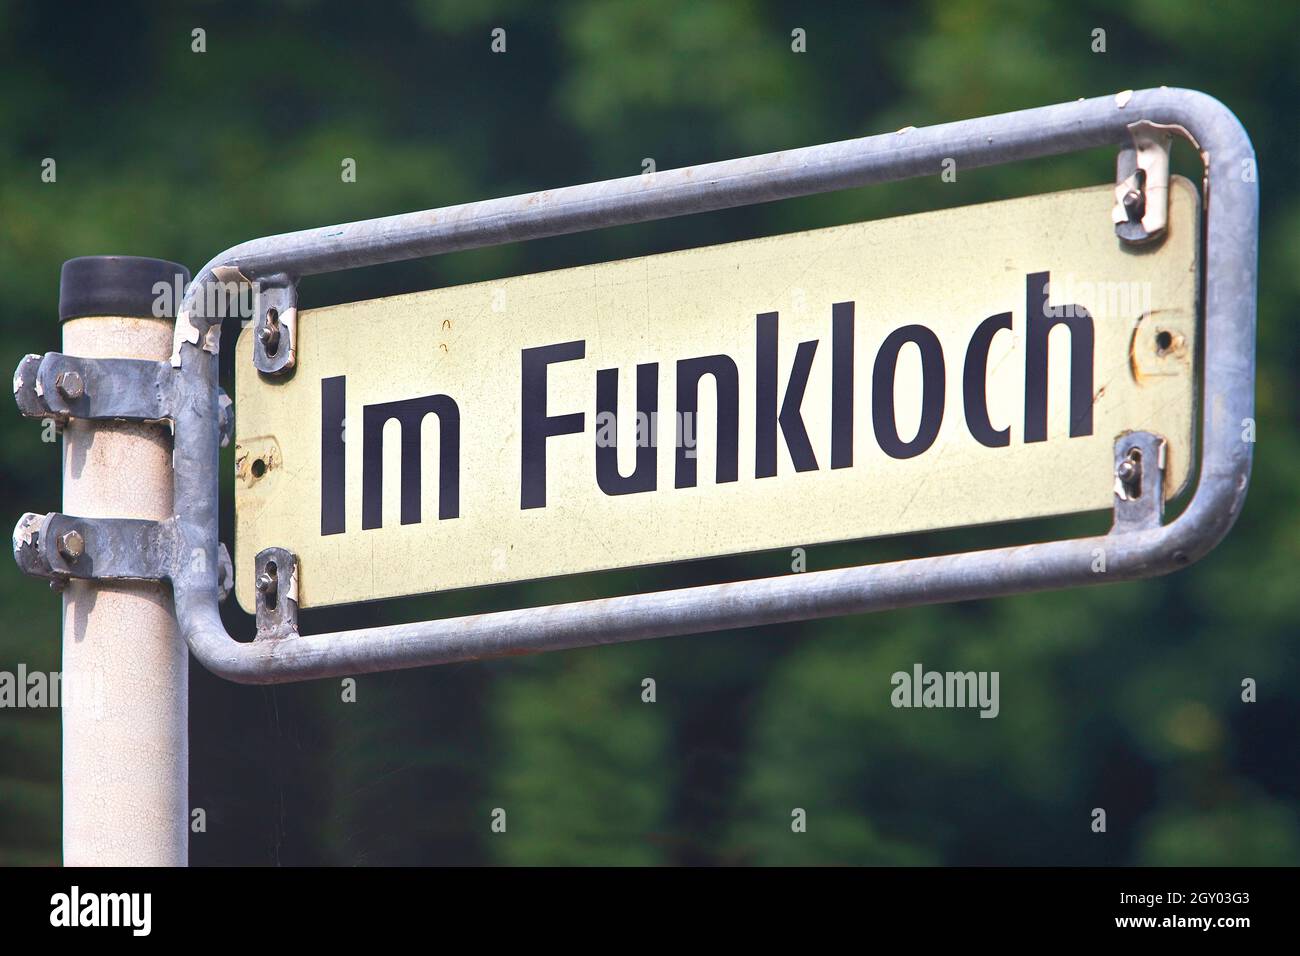 Segnaletica stradale im Funkloch, Germania, Renania settentrionale-Vestfalia, Bergisches Land, Wuppertal Foto Stock